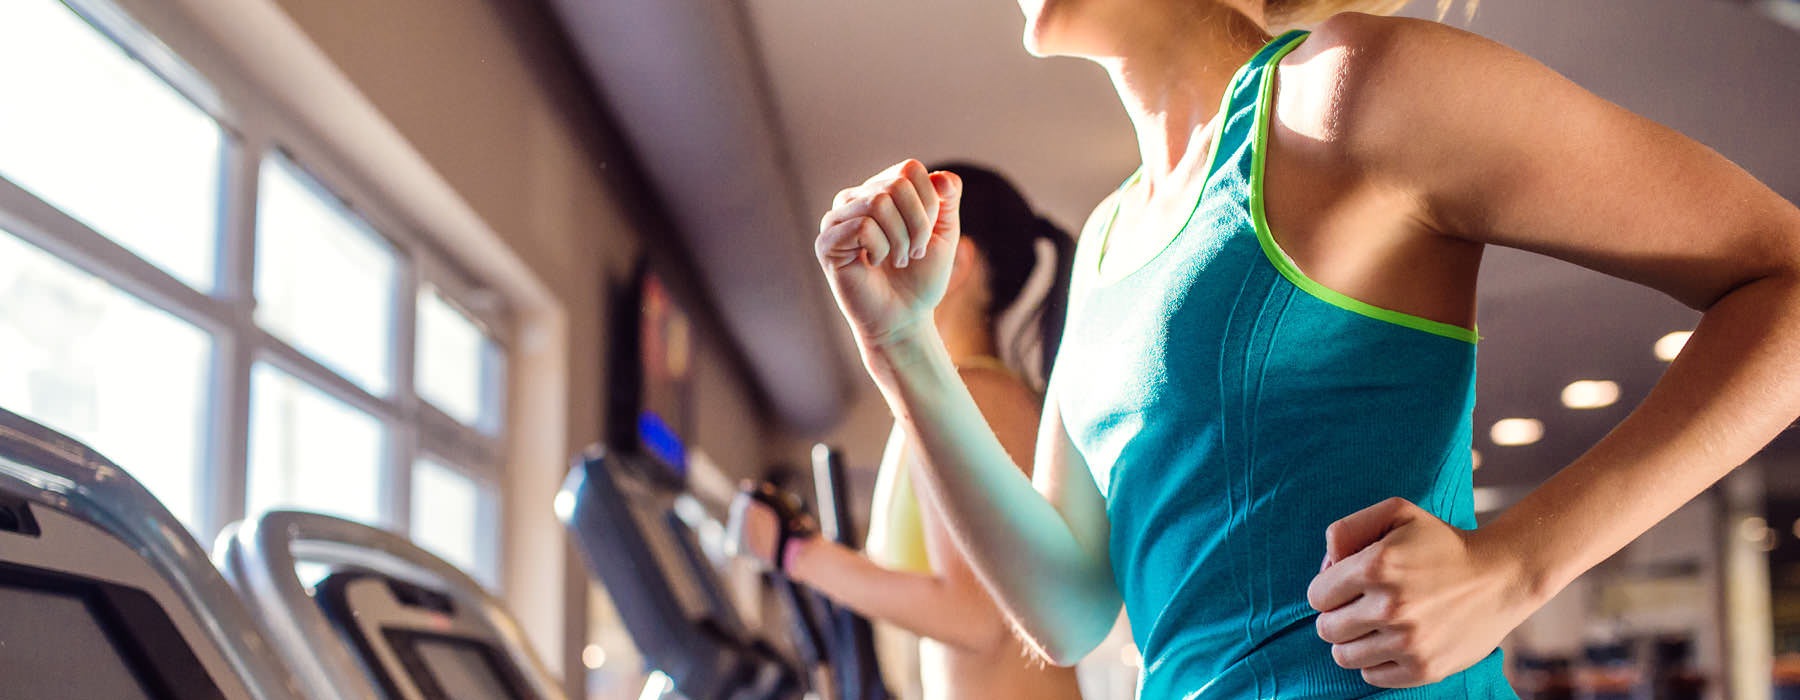 women on treadmills in gym